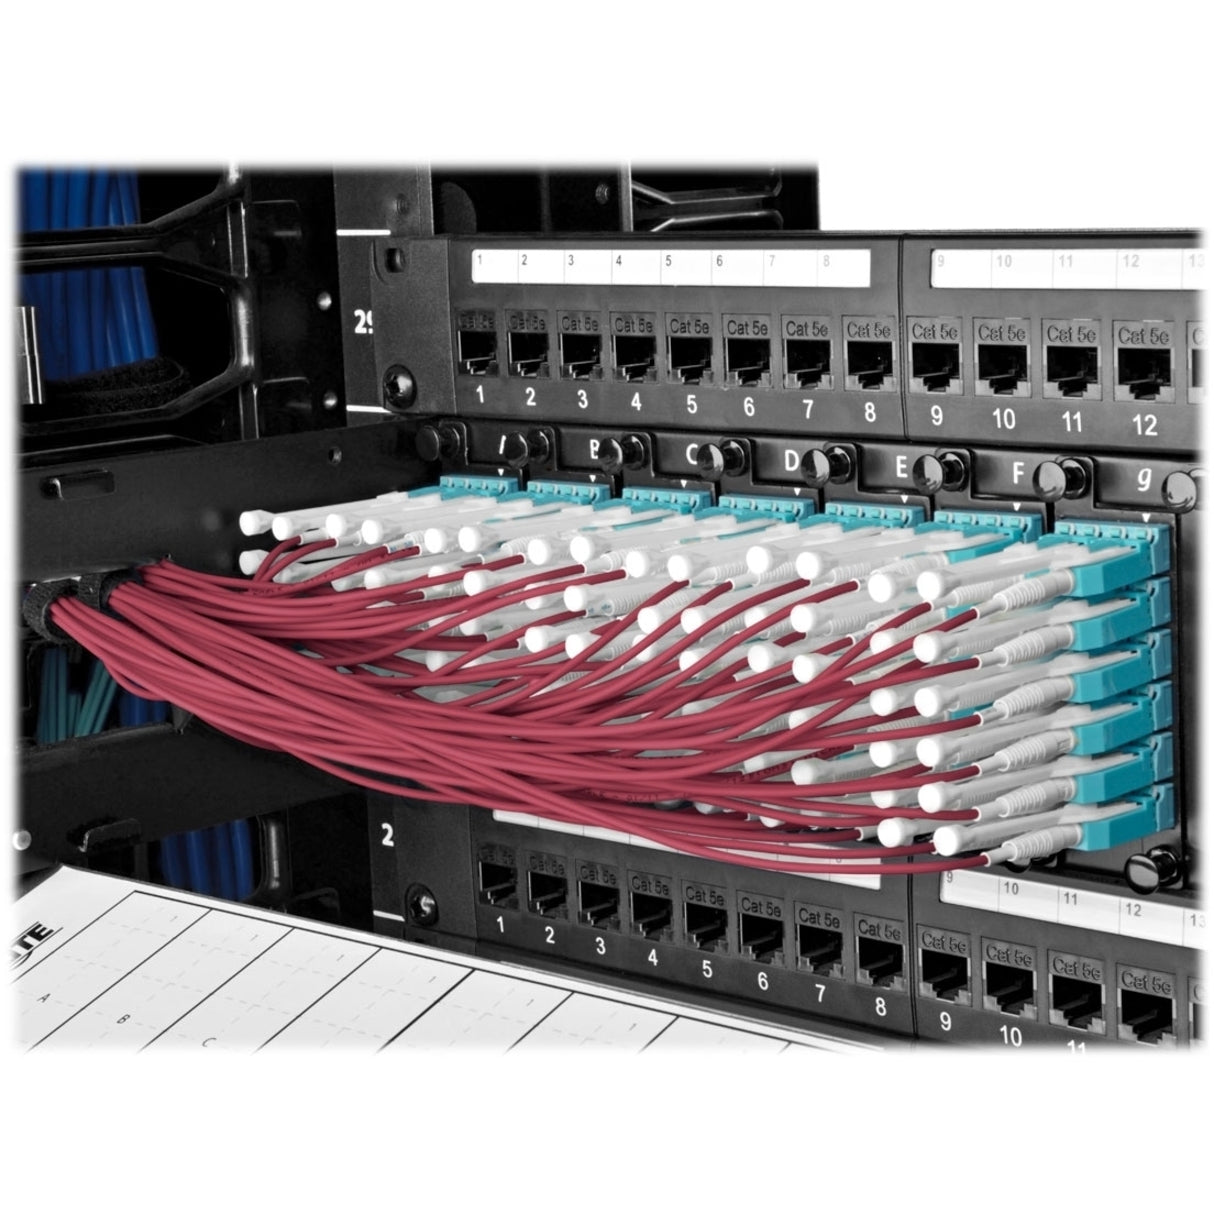 Tripp Lite N821-07M-MG-T Fiber Optic Network Cable, 23 ft, Multi-mode, 100 Gbit/s, Magenta